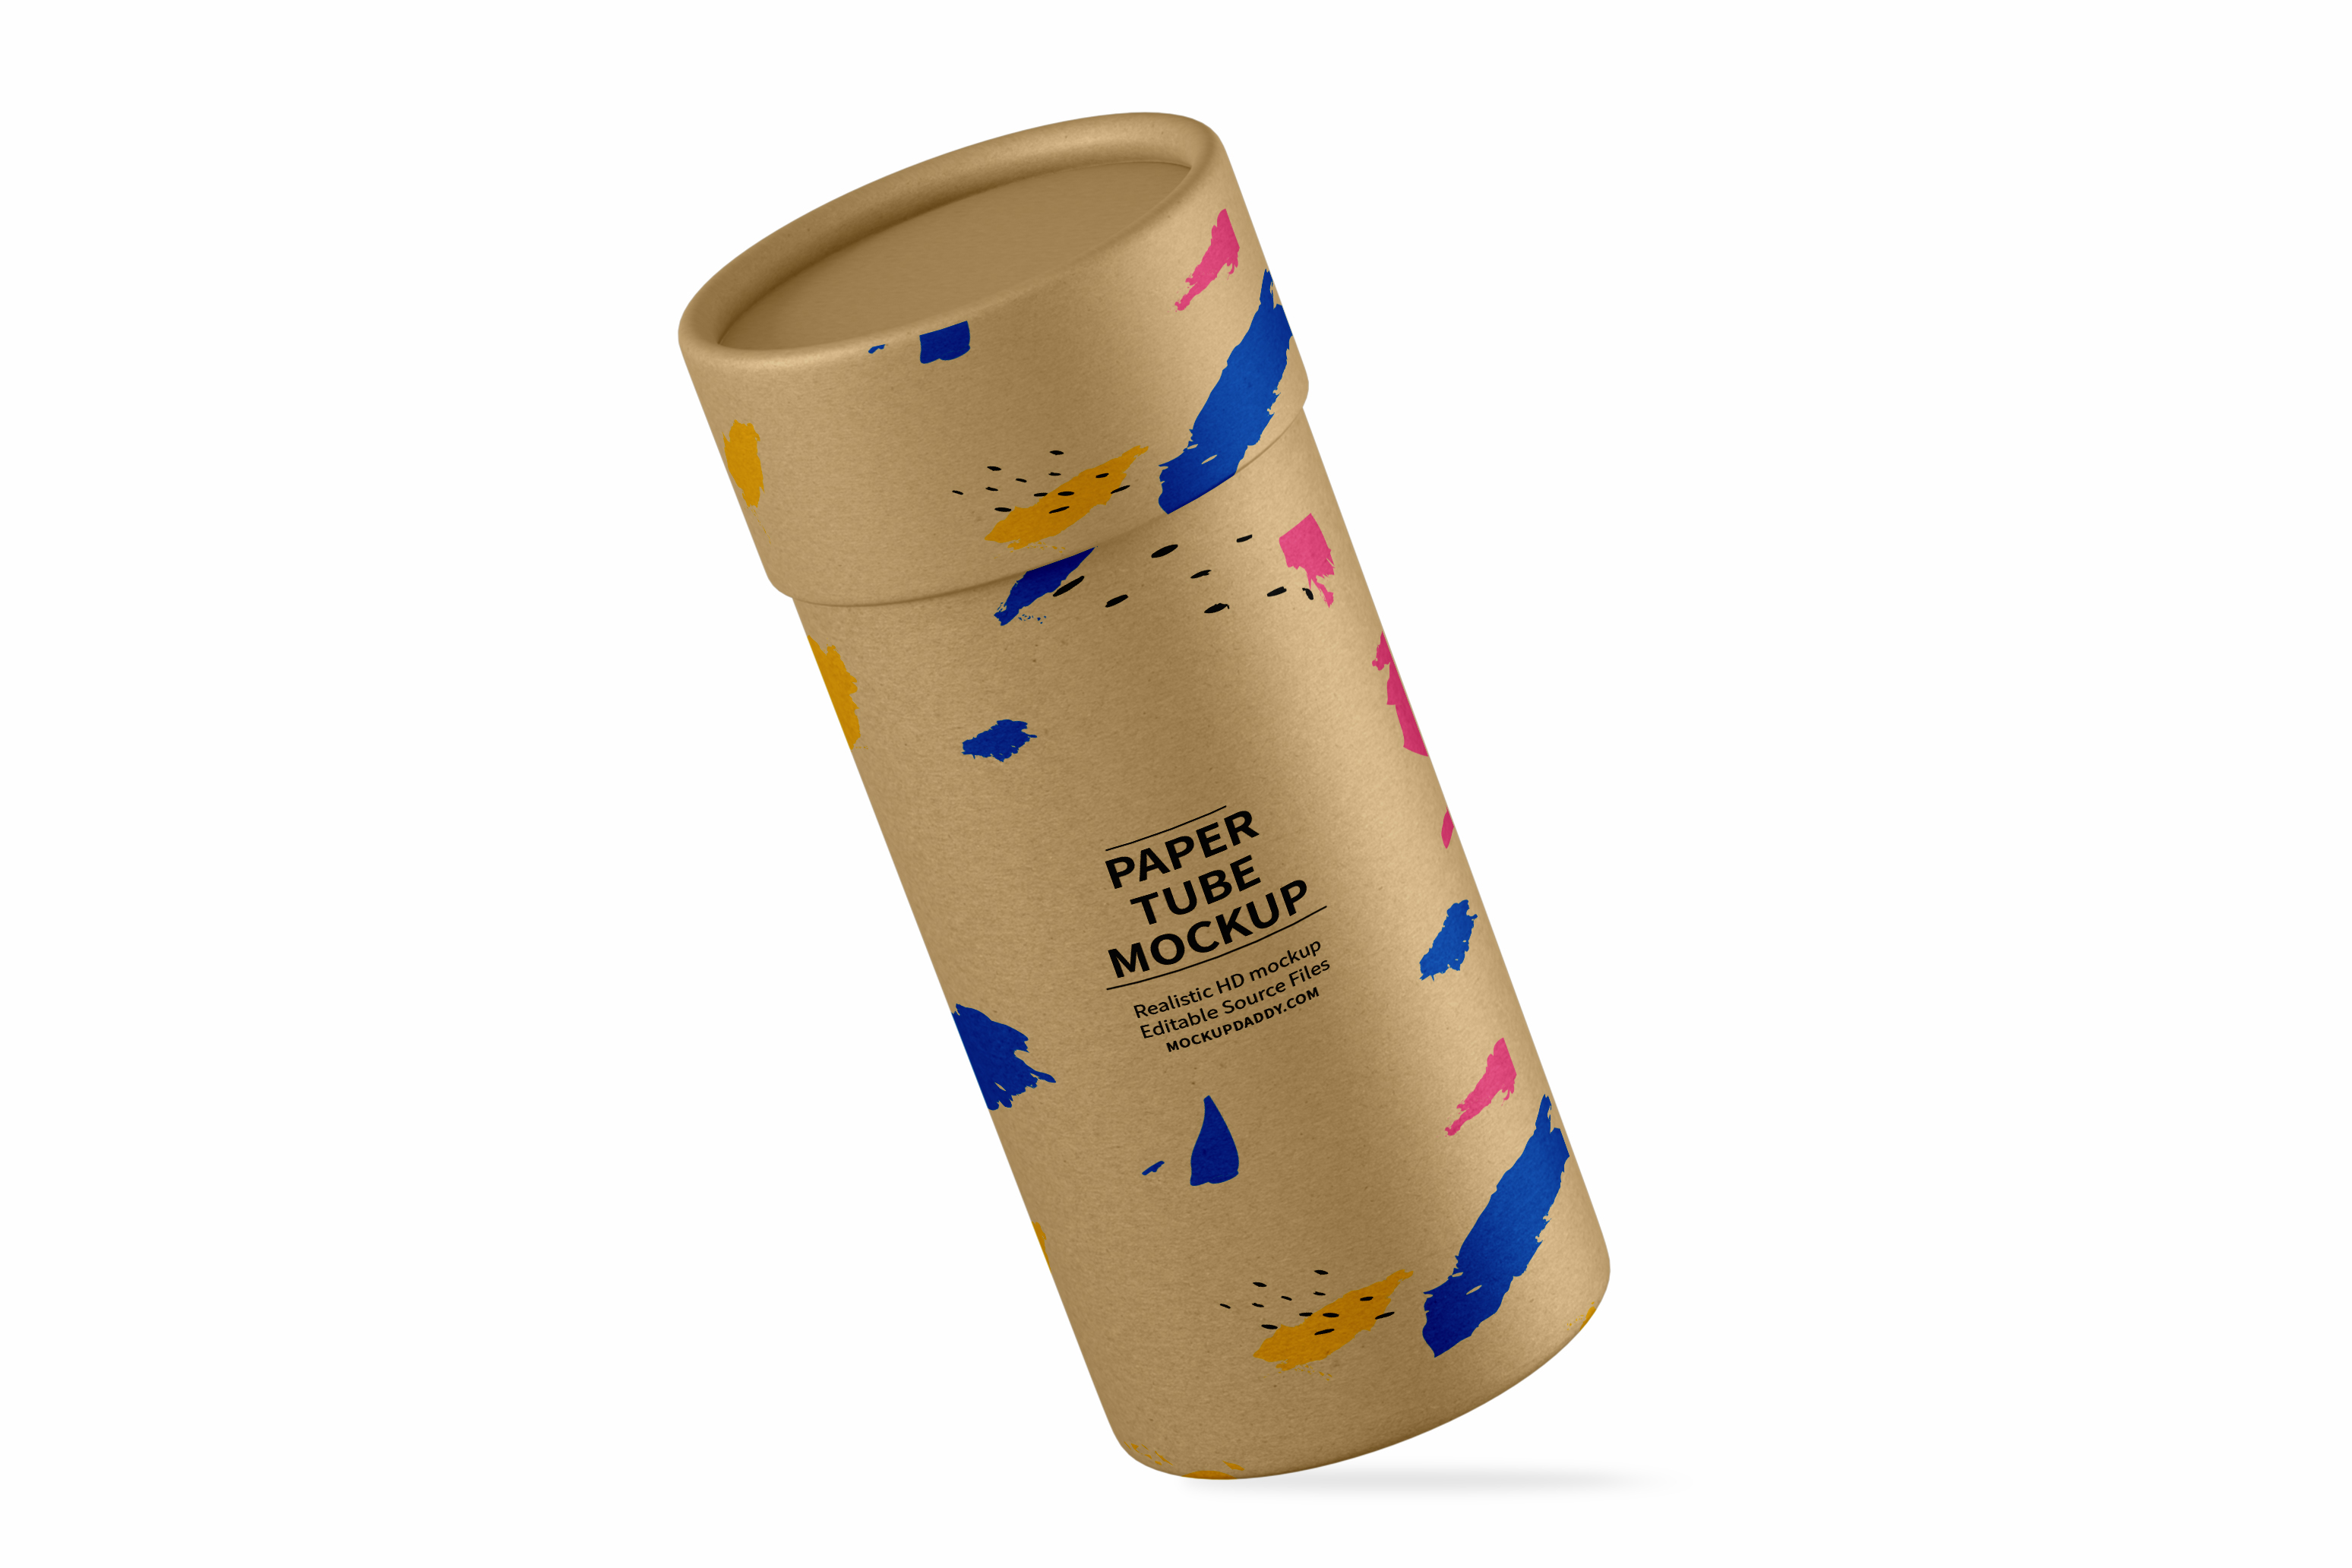 Download Kraft Paper Tube Mockup Free Packaging Mockup Free Packaging Mockups To Download Boxes Wine Bottles Digipack And Other Great Packaging Mockups Available To Free Download